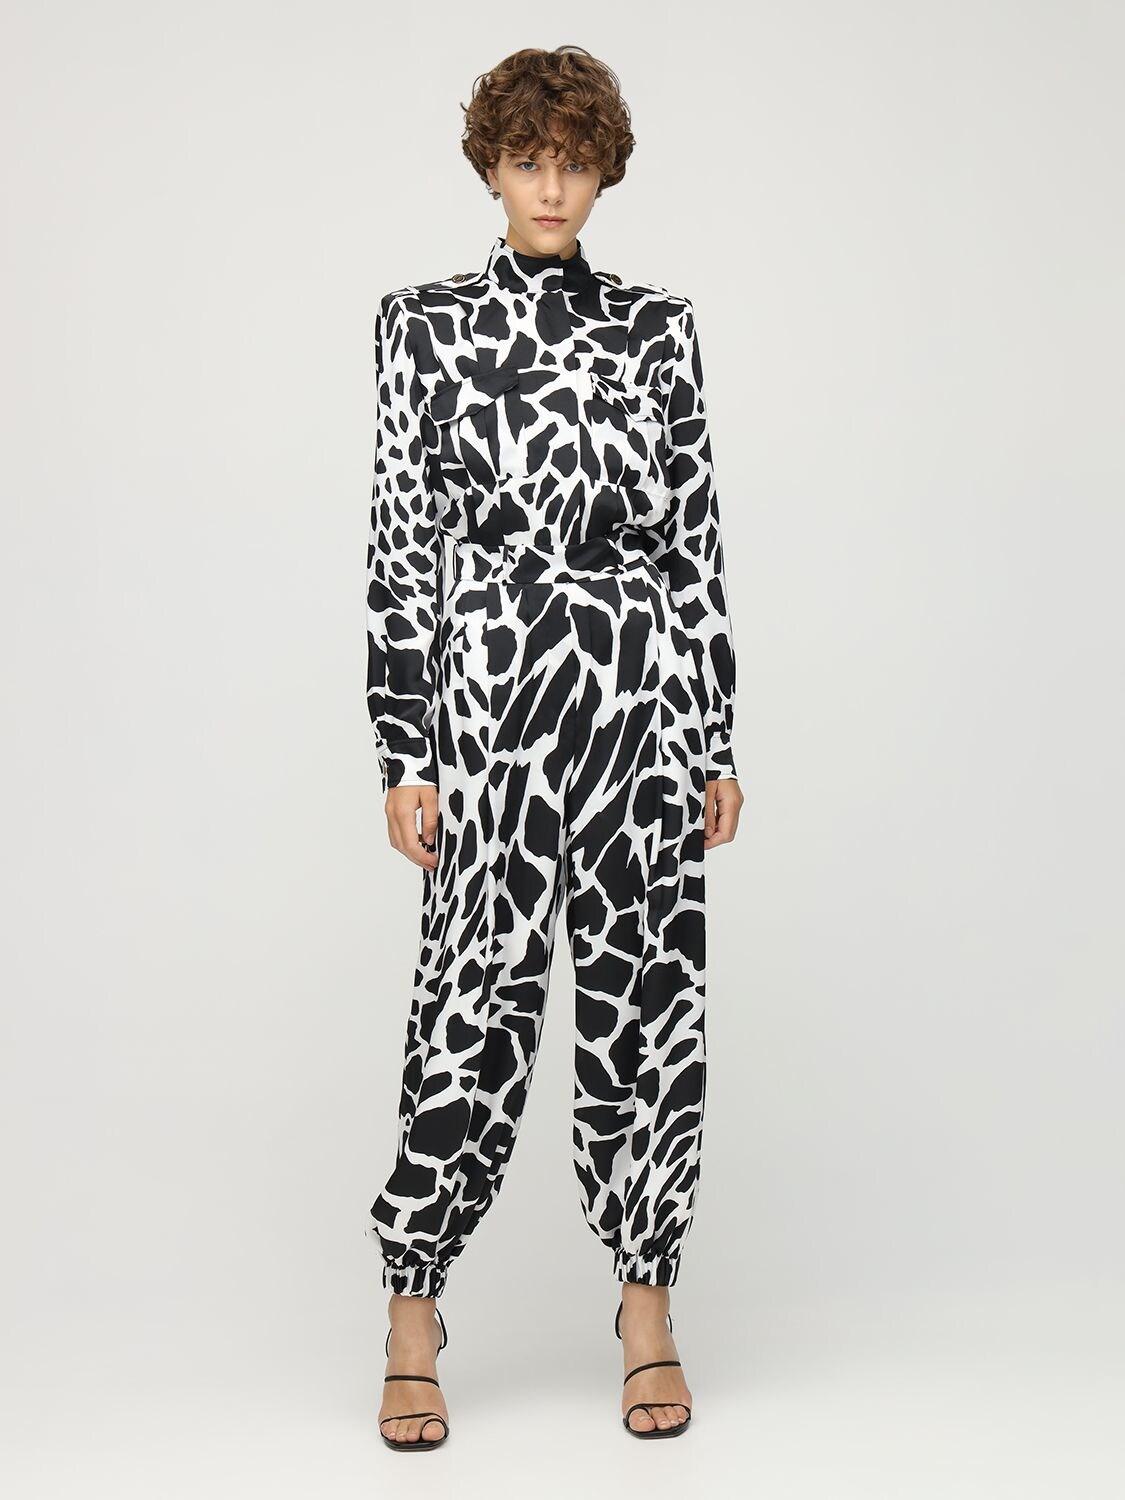 Alexandre Vauthier Giraffe Print Twill Jumpsuit in White/Black (Black) -  Lyst